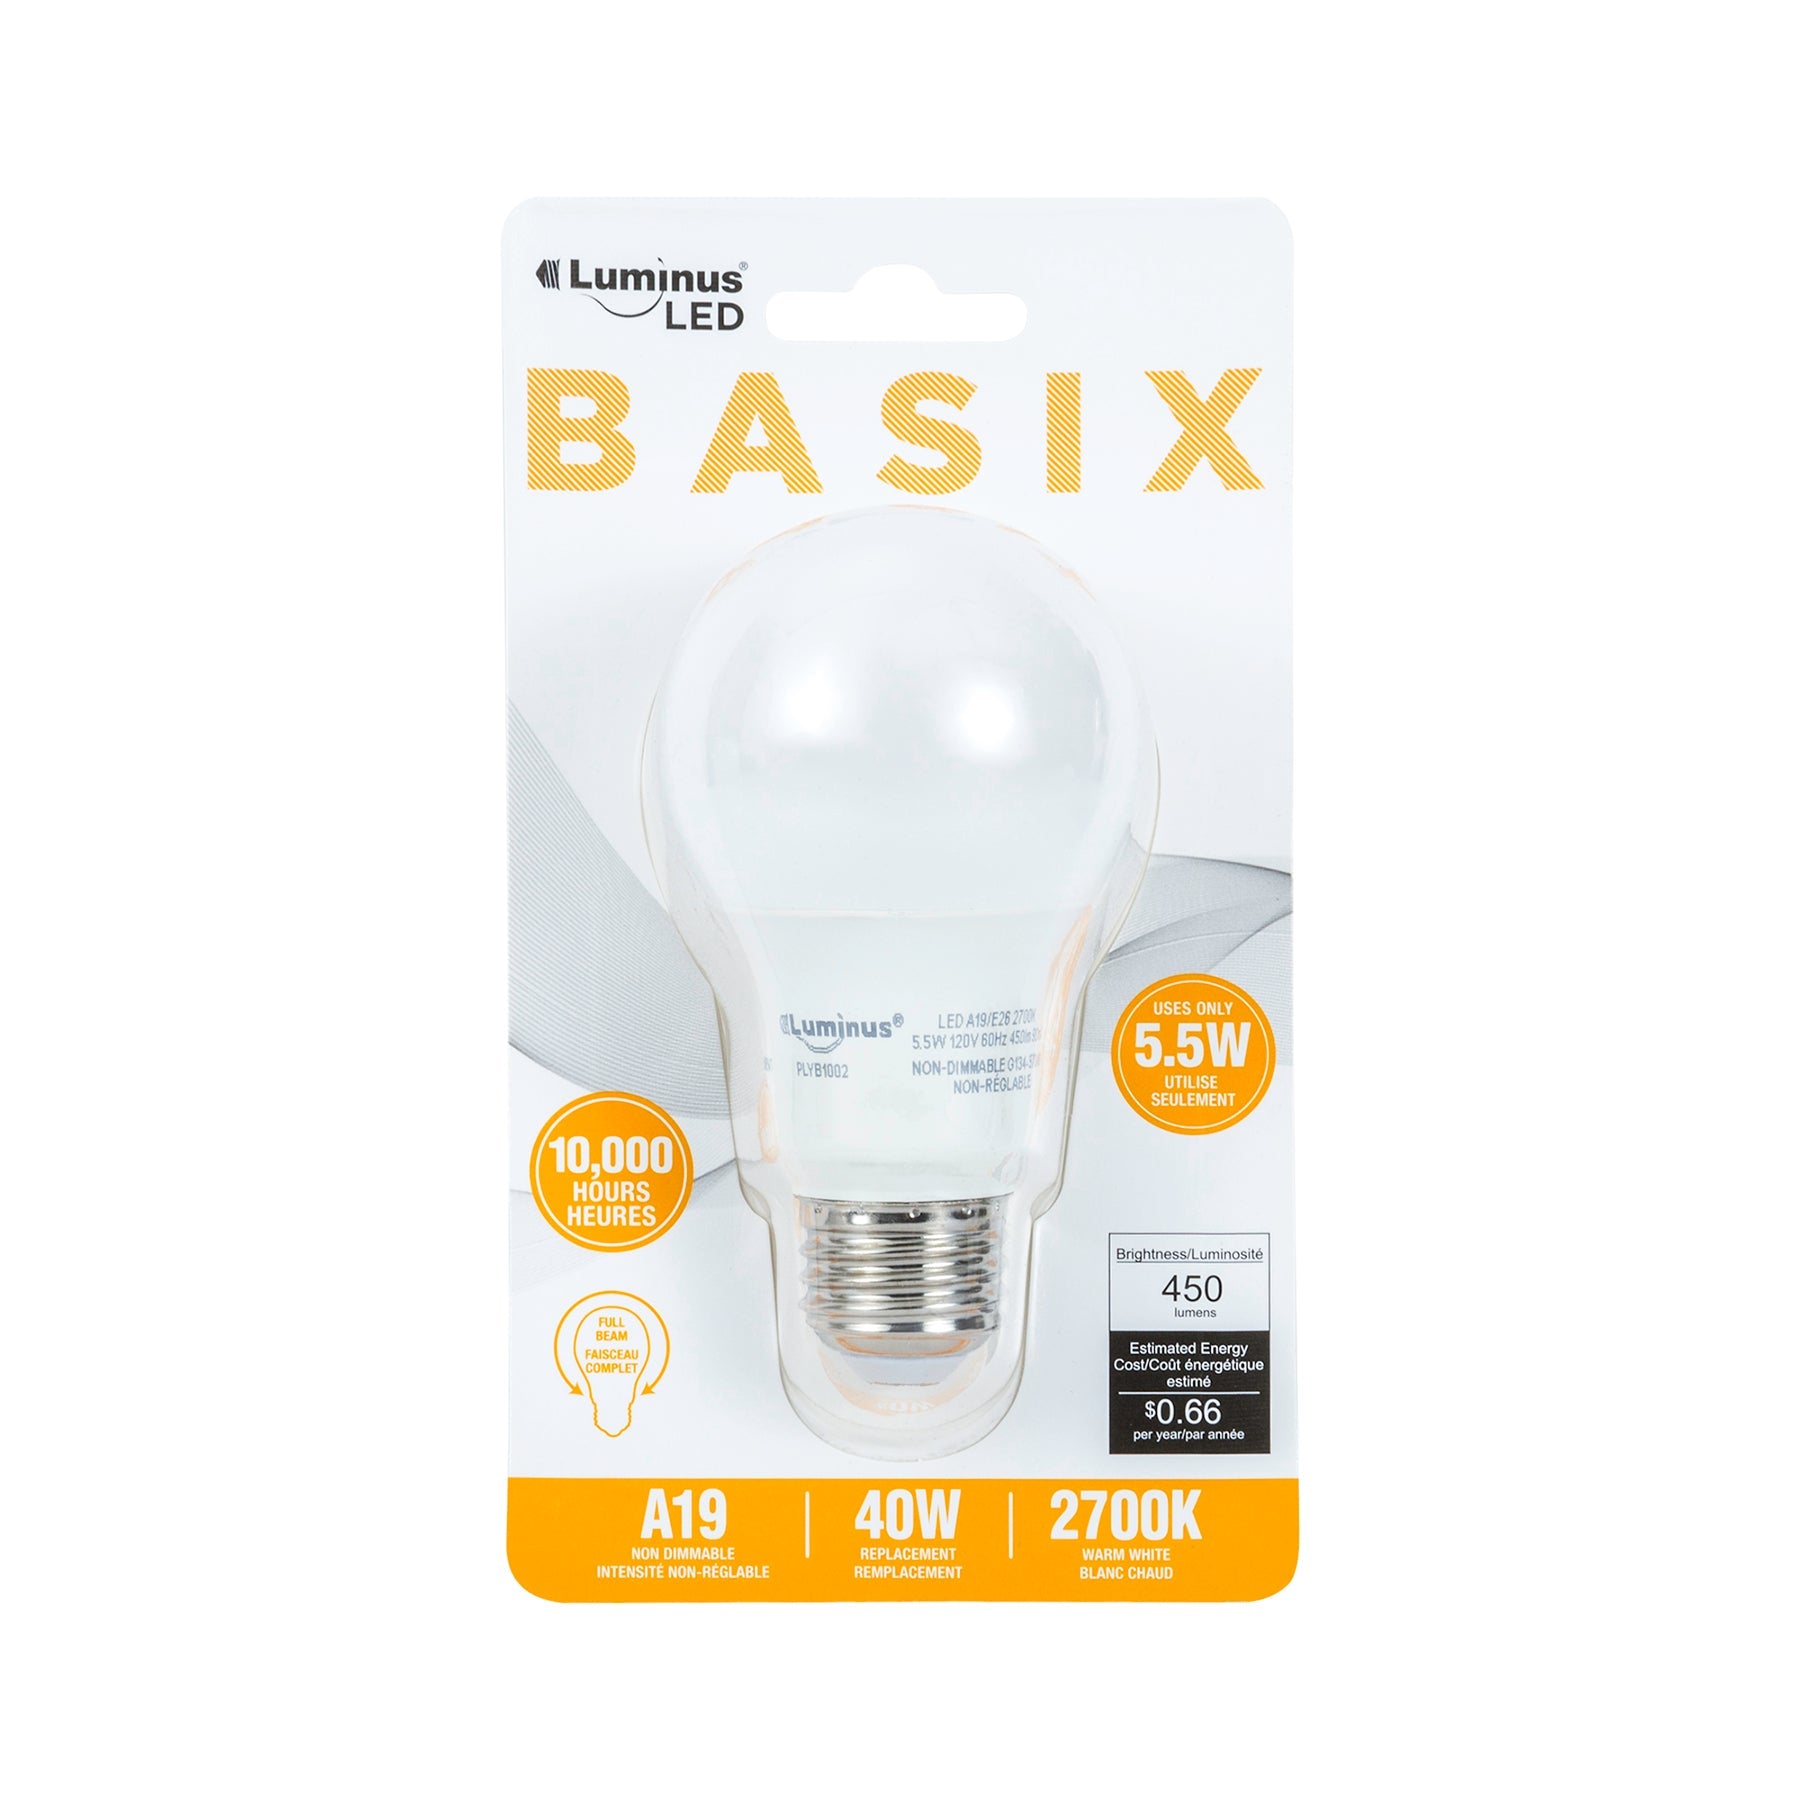 Luminus Led Basix Light Bulb Warm White A19 2700K